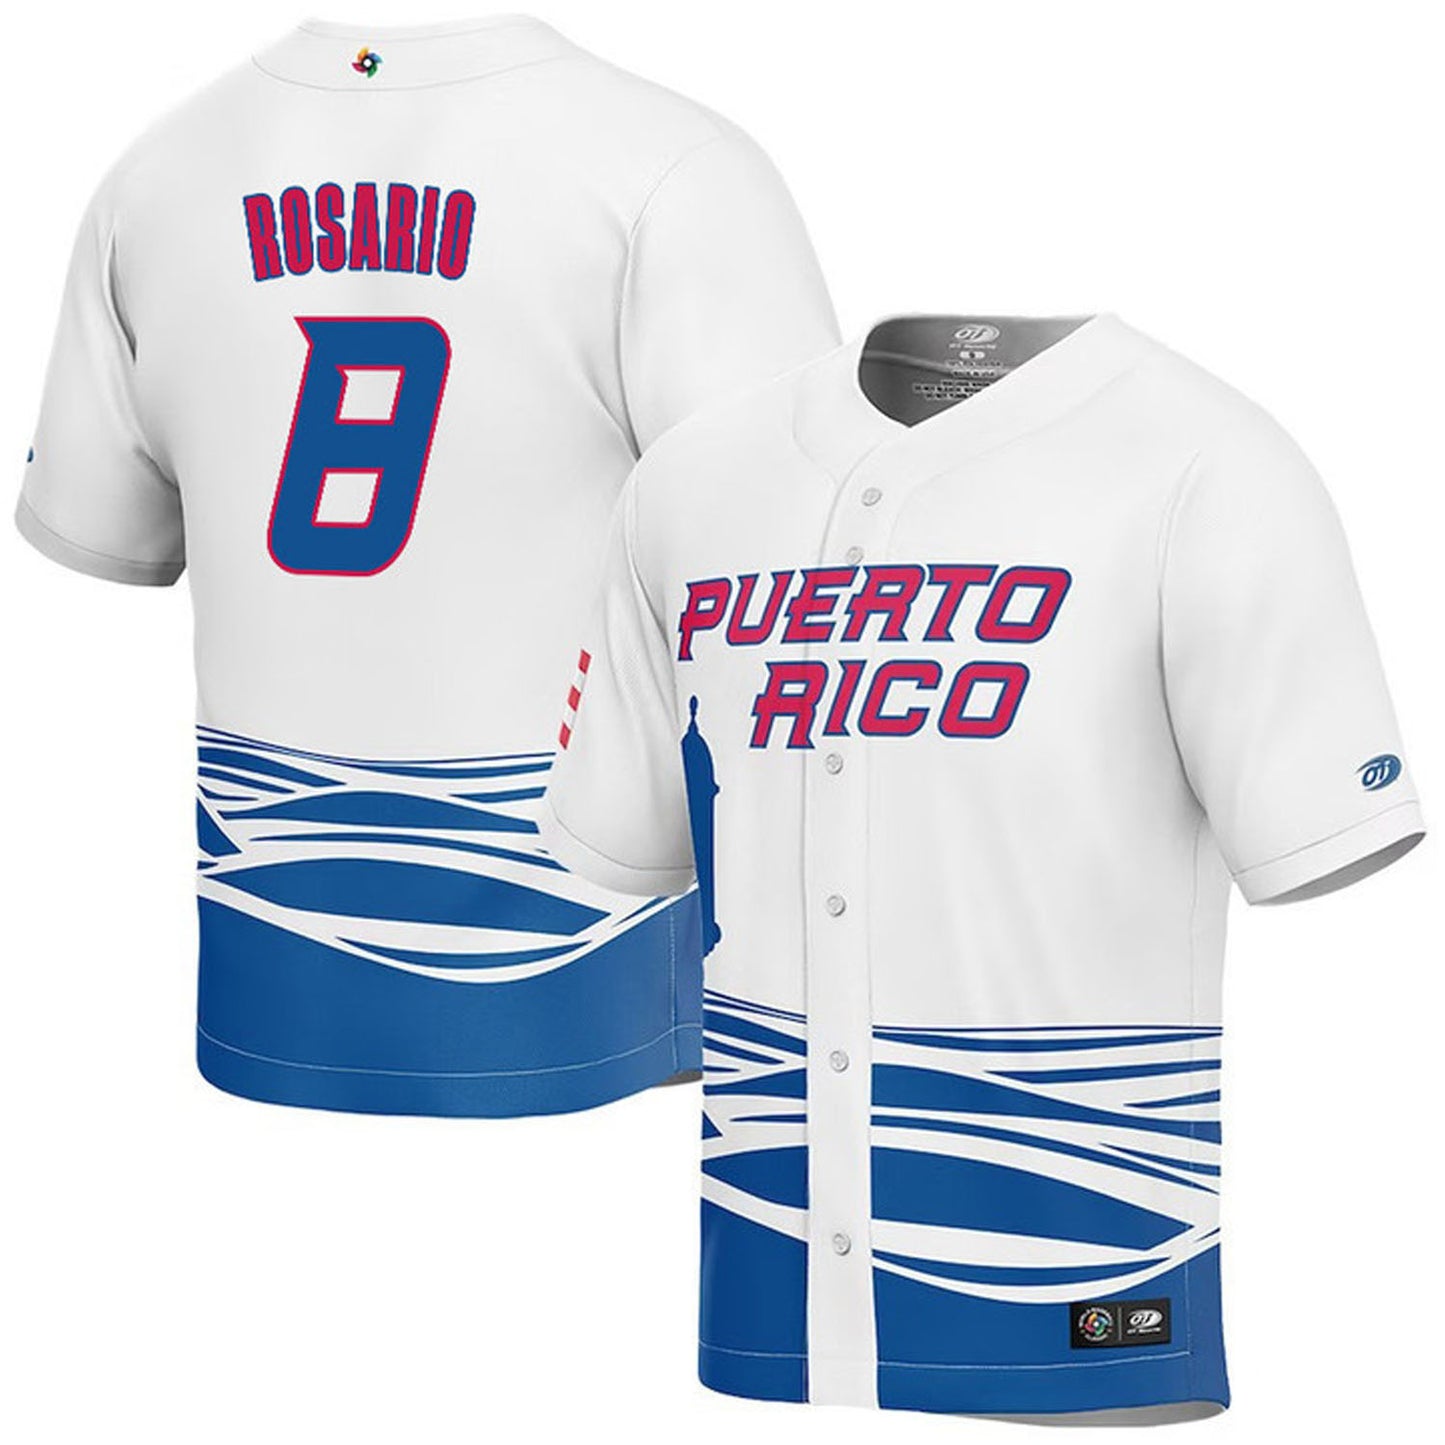 WBC Eddie Rosario Puerto Rico 8 Jersey